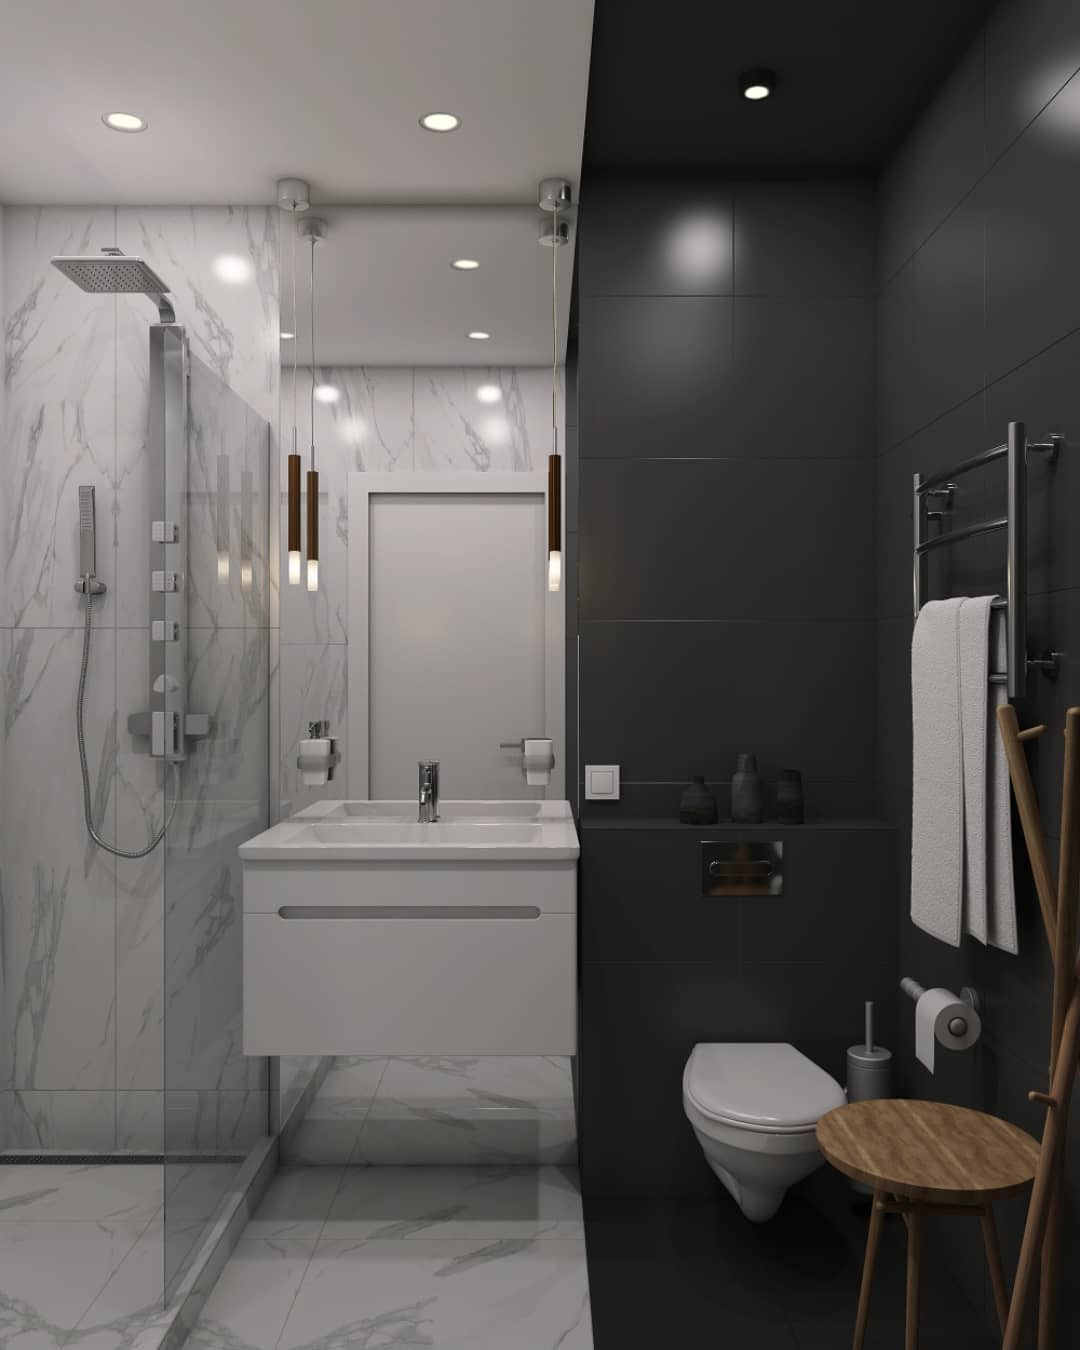 Bathroom Decor Ideas 2020
 Bathroom Designs 2020 Steampunk Bathroom Decor Ideas 35